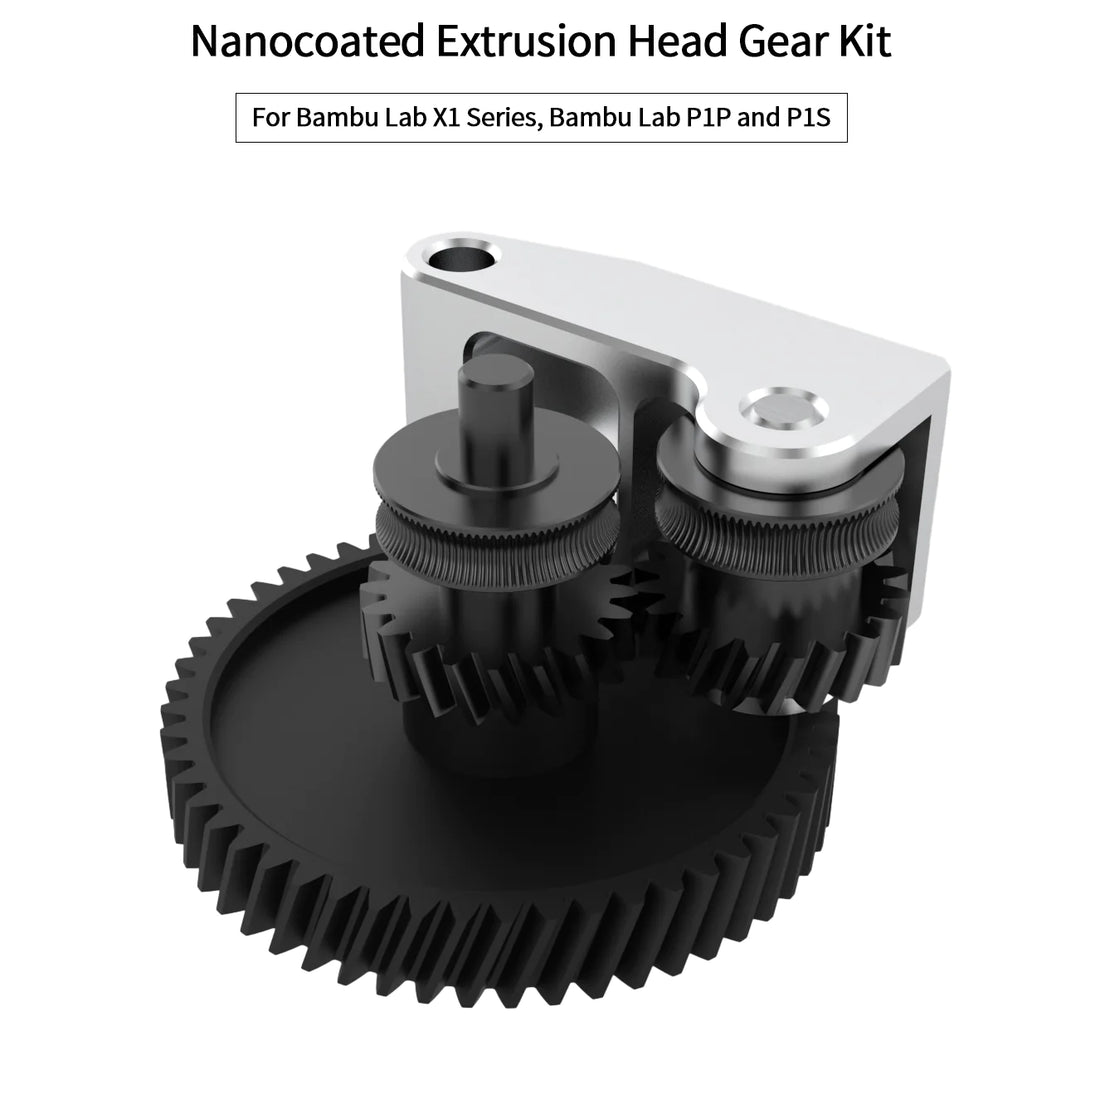 Bambu X1/P1P nano coated extrusion gear kit by Fysetc